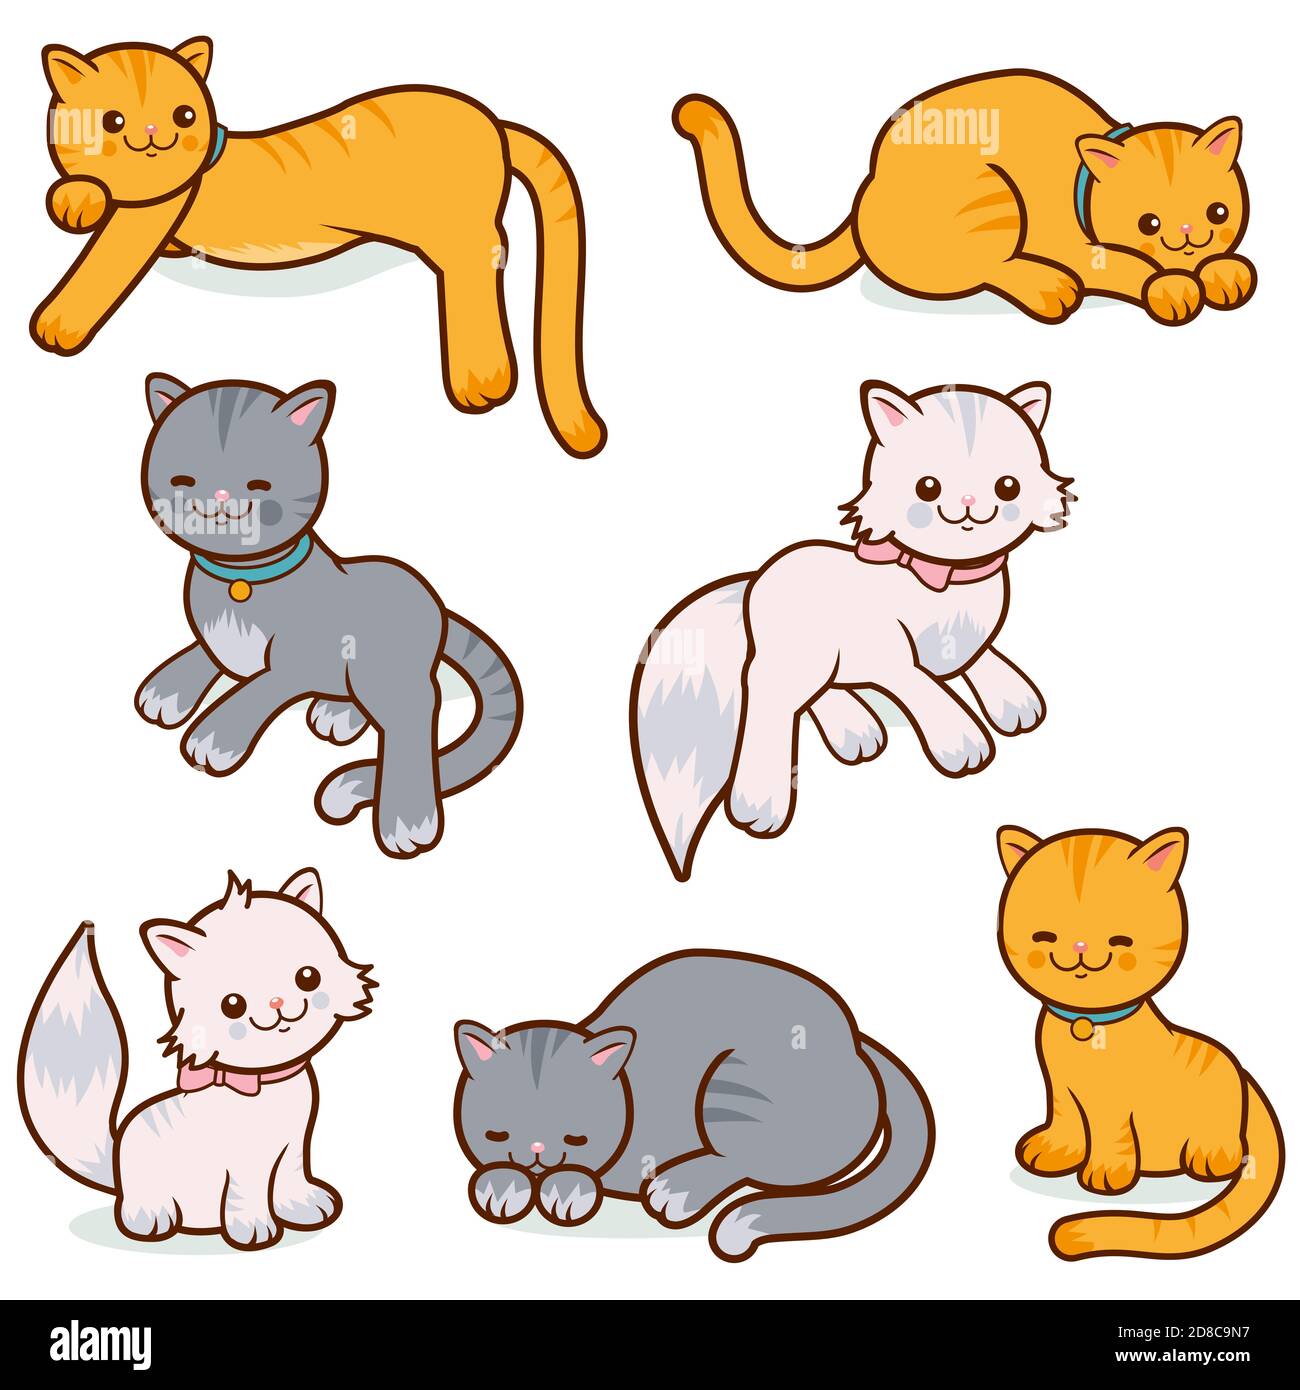 Cartoon cats collection. Illustration set. Stock Photo